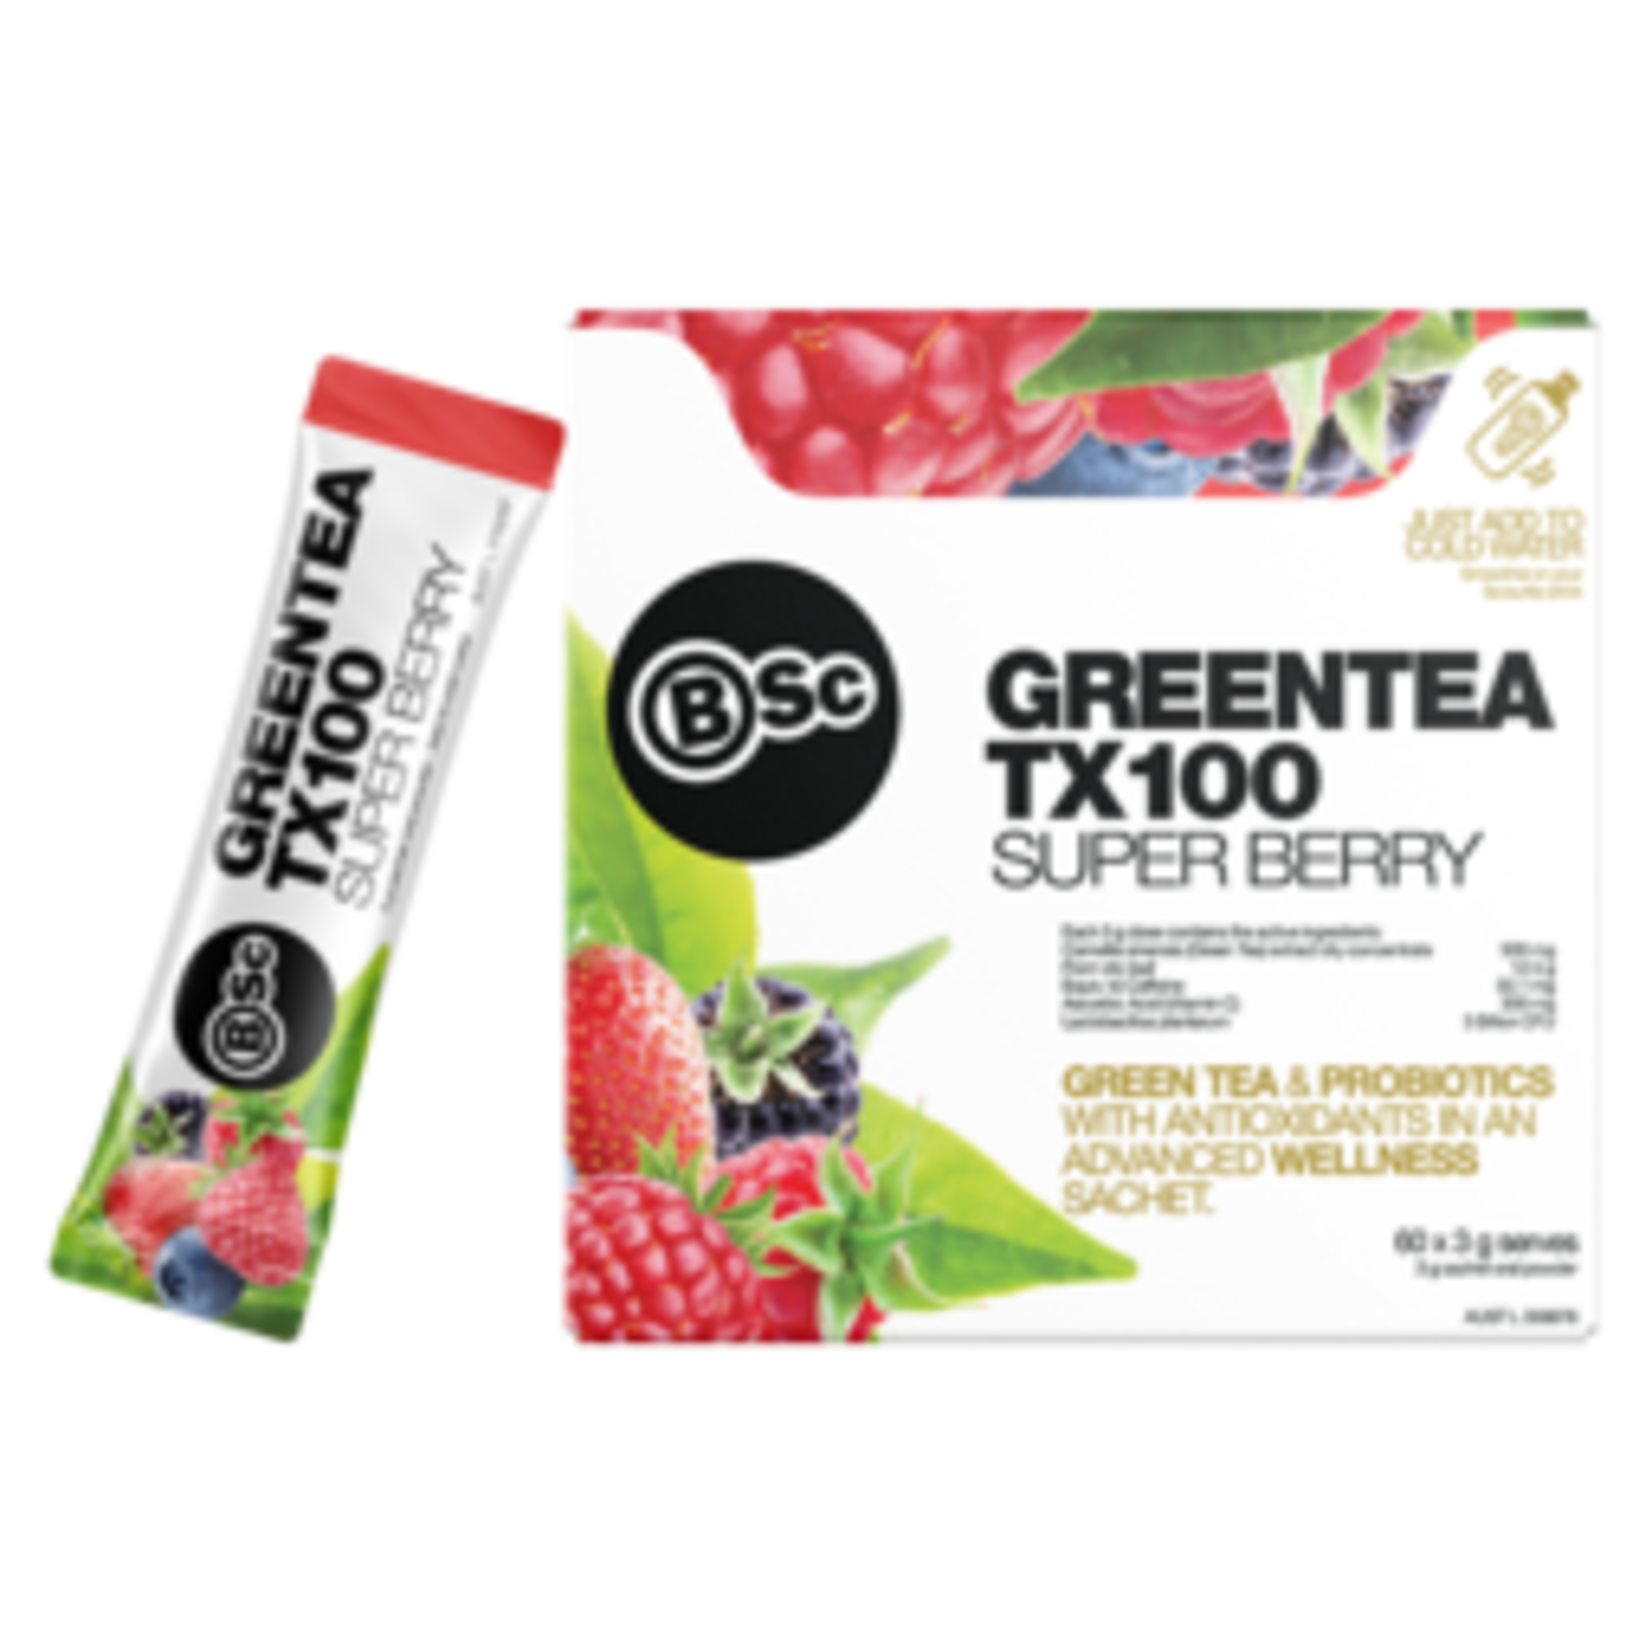 Body Science BSC Green tea TX100 Single Serve Sachets